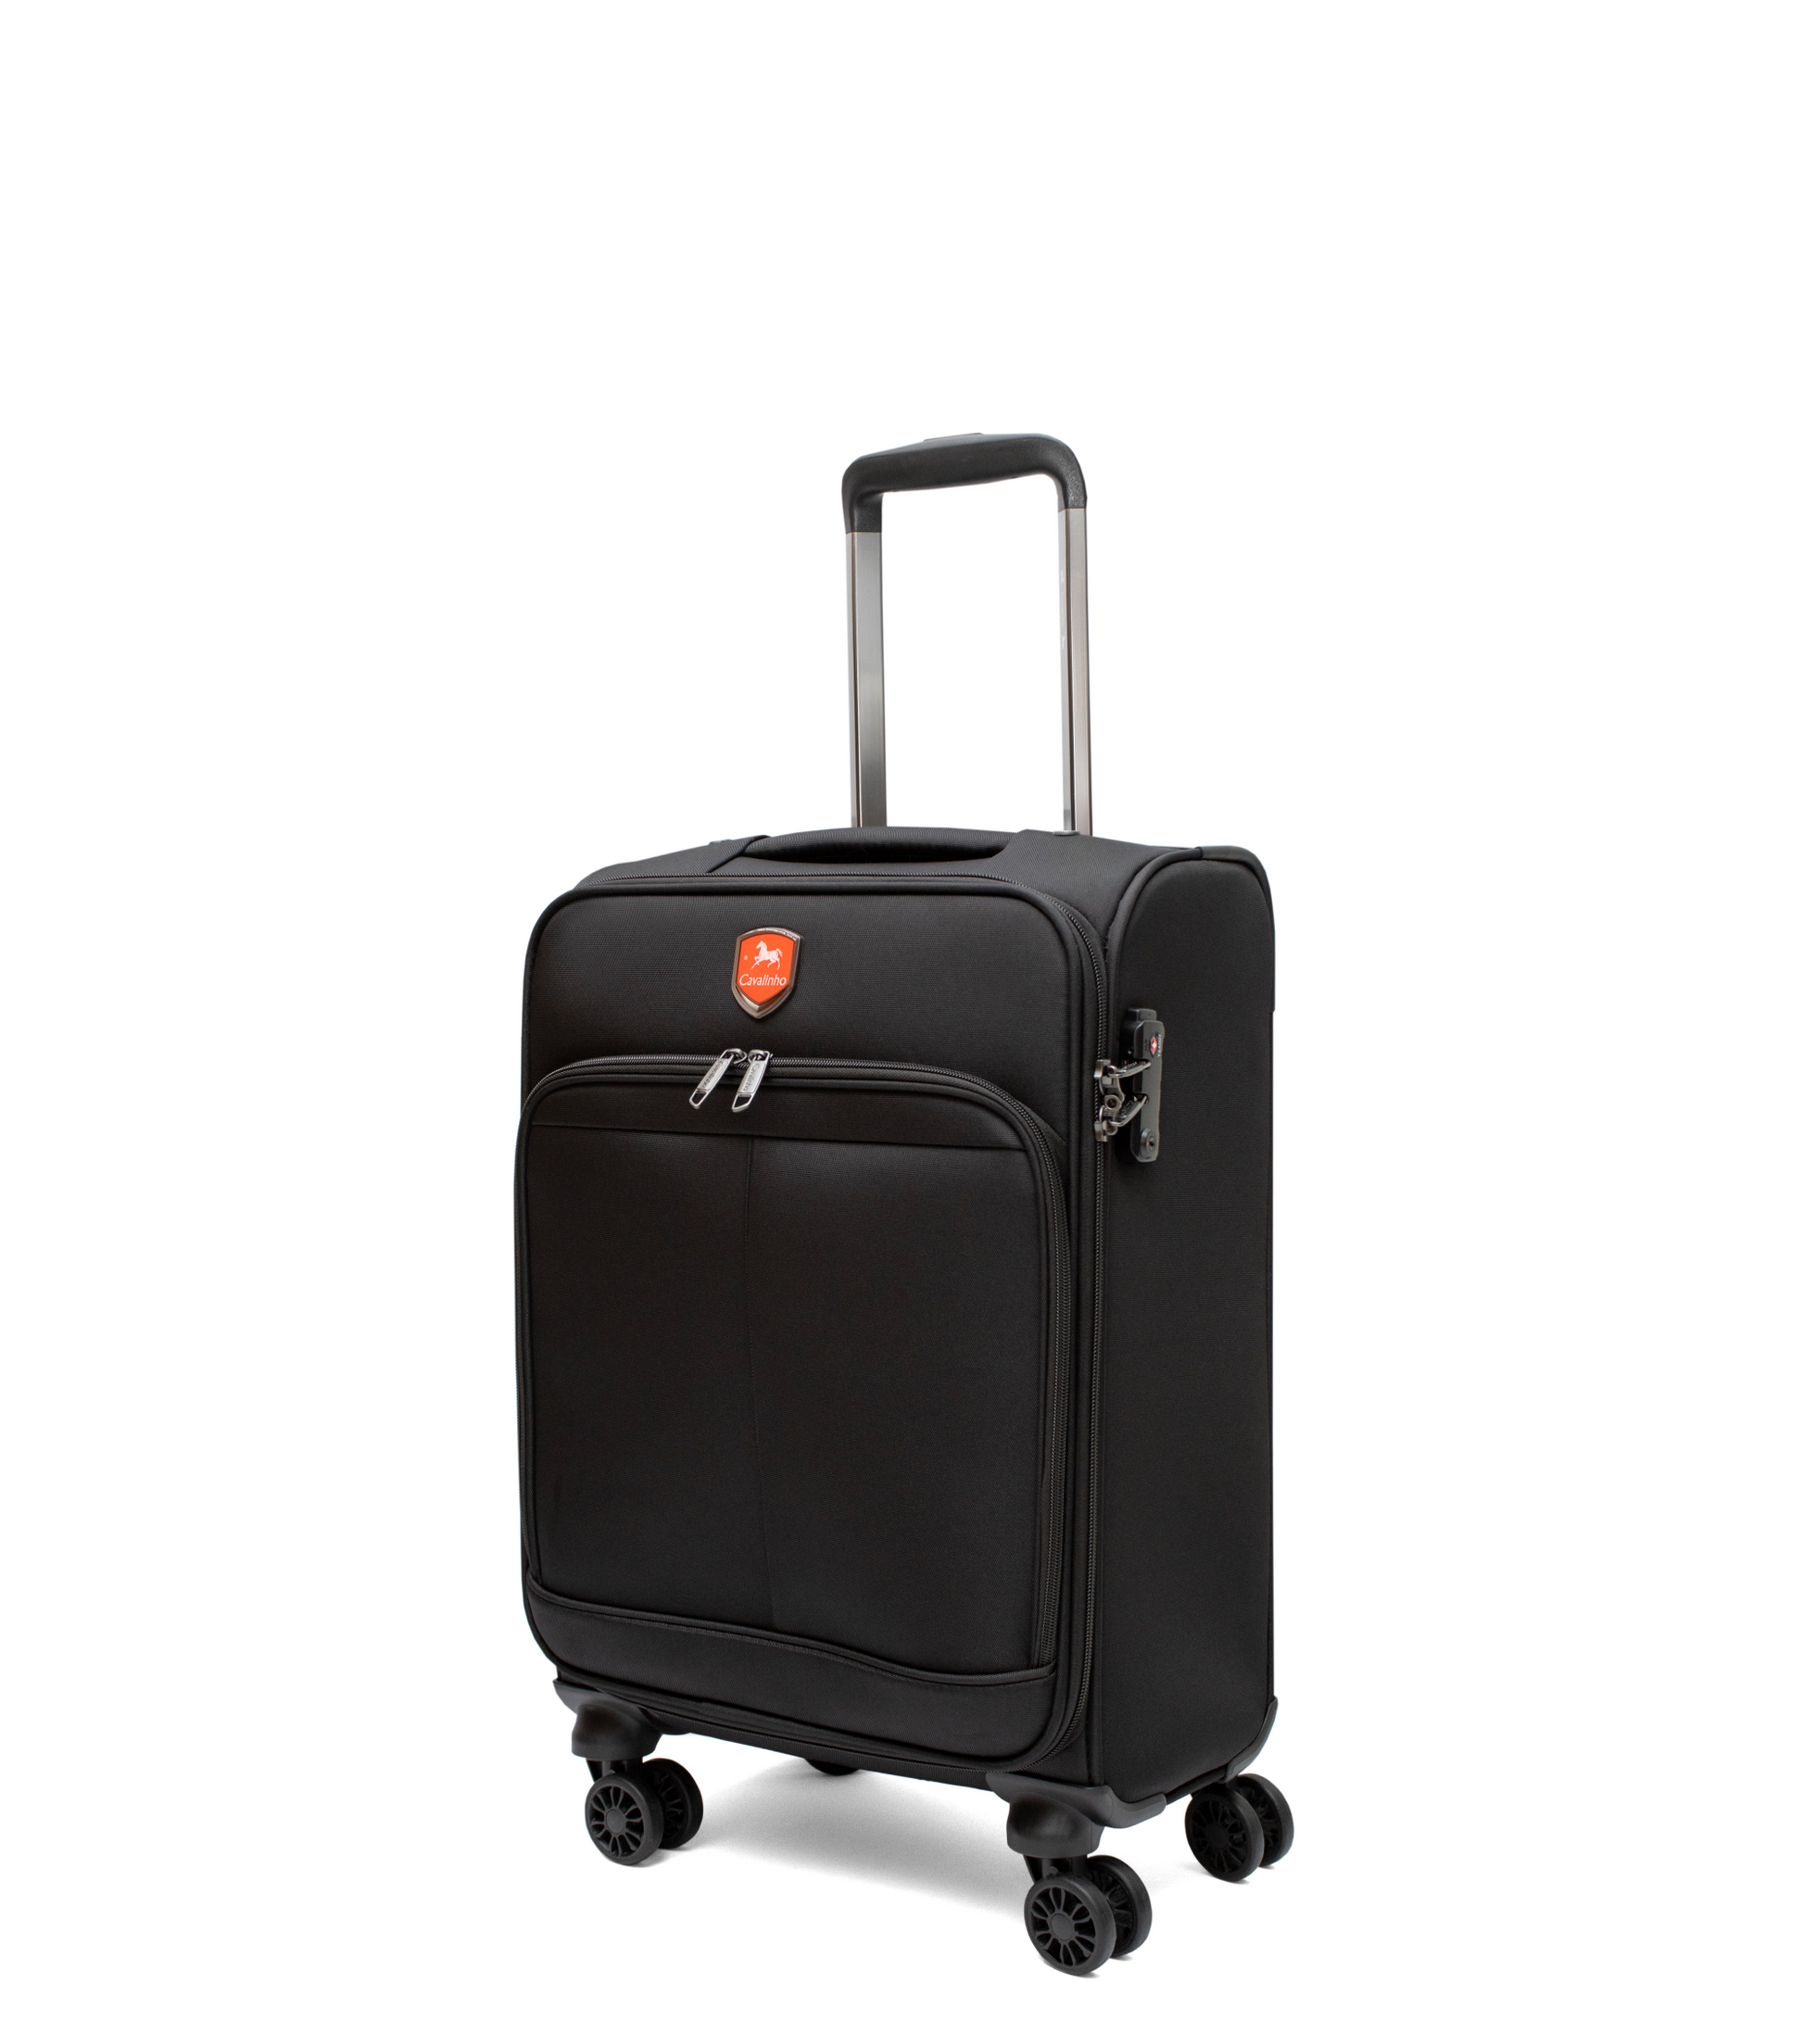 Cavalinho Carry-on Softside Cabin Luggage (16" or 19") - 19 inch Black - 68020003.01.19_2_68452de3-b002-43e5-94d8-04f9b7c61ed8